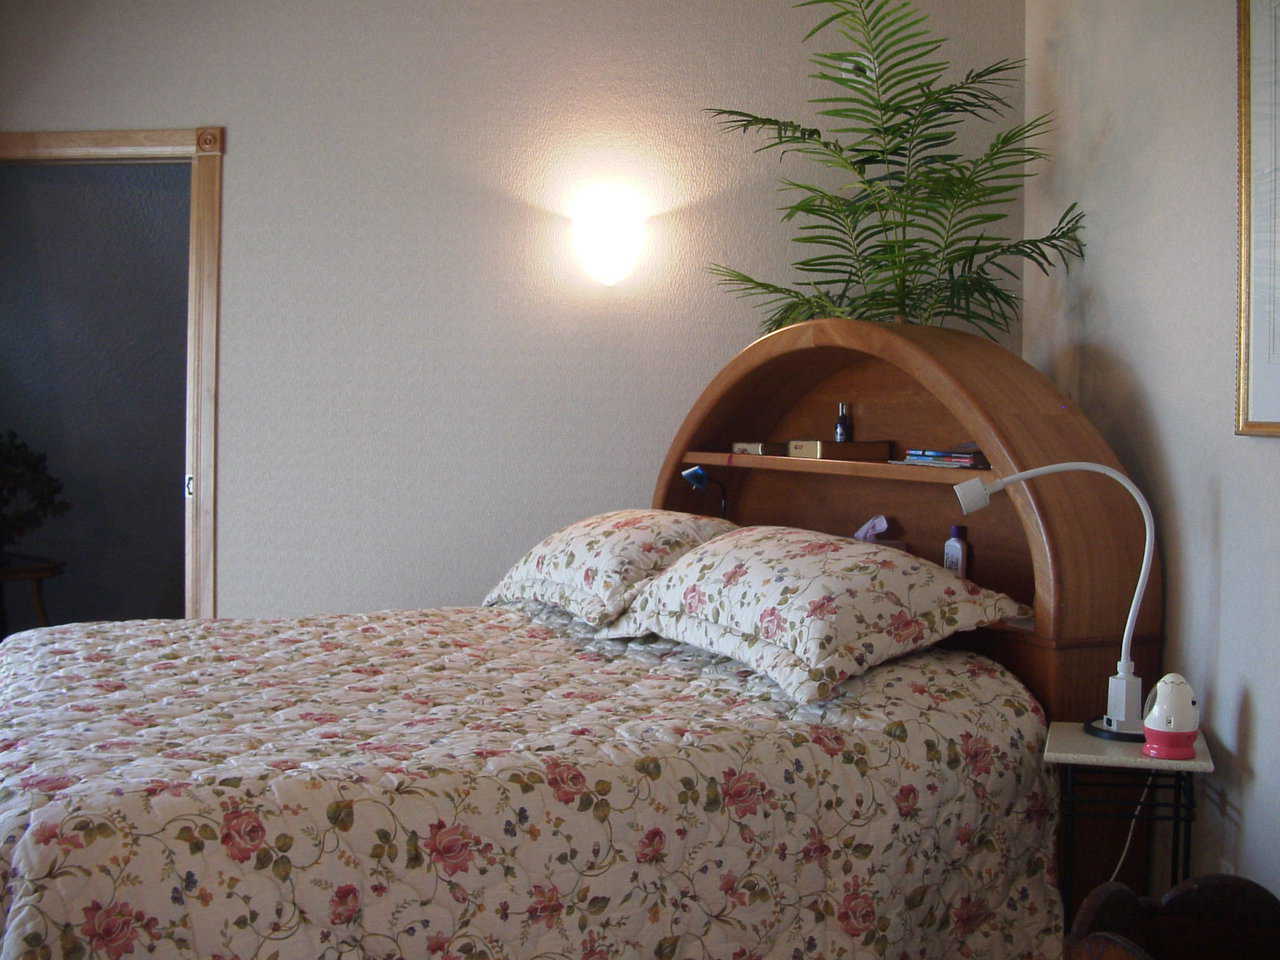 Master Bedroom — Barbara Stitt designed a massive, cherry-wood headboard for the master bedroom.